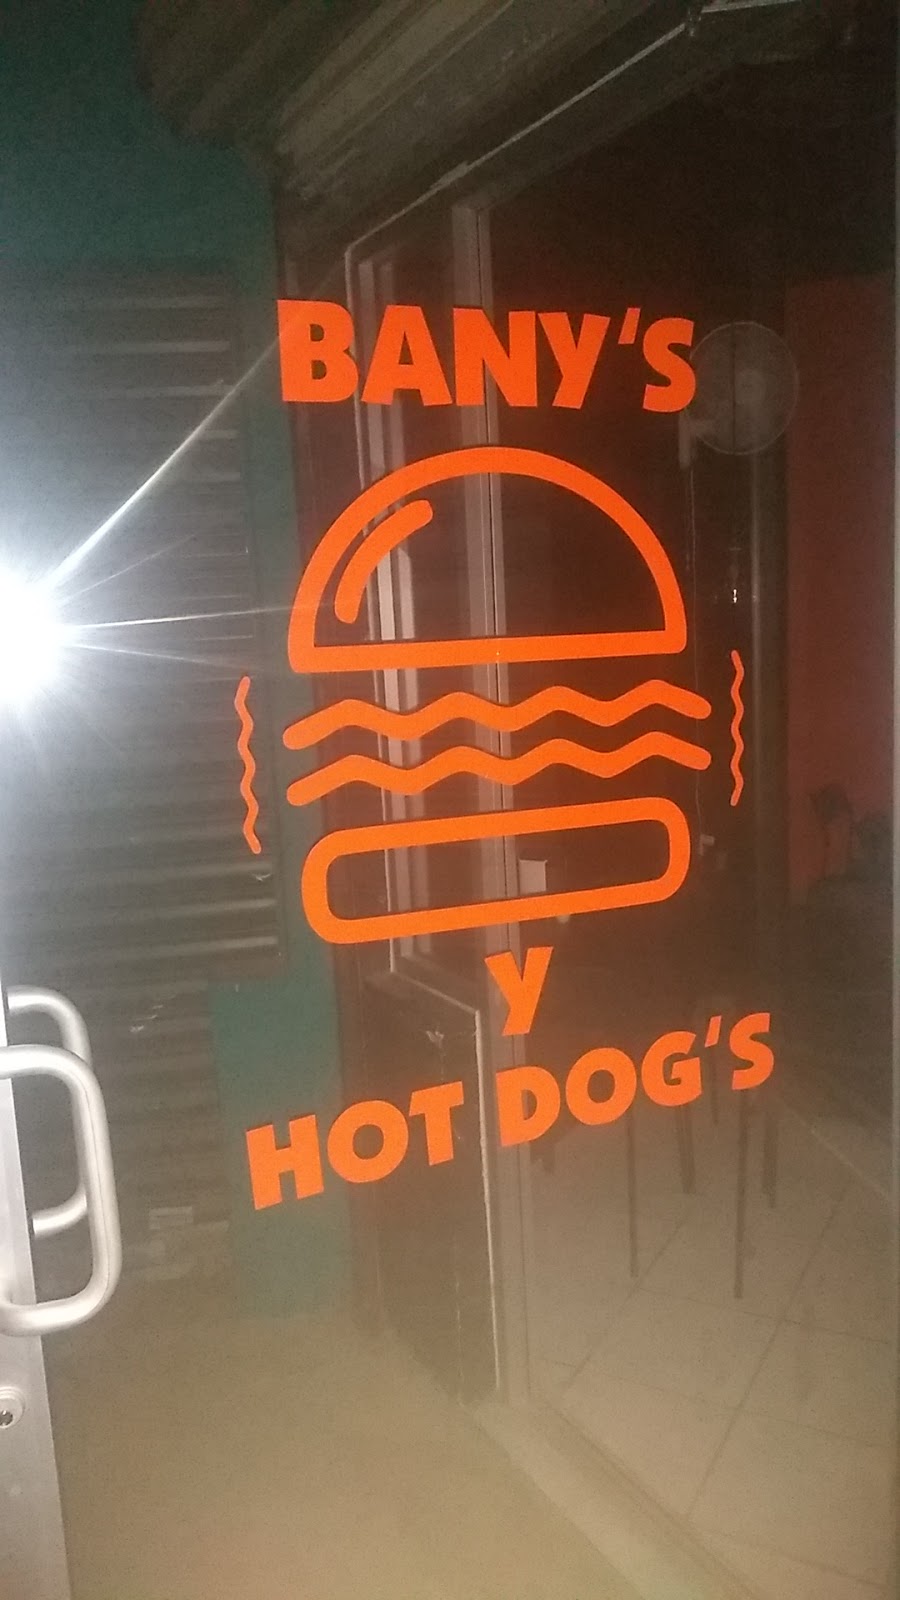 Banys hamburguesas y hotdogs | Lomas de San Ignacio 109, Lomas de Santa Anita, 21400 Lomas de Santa Anita, B.C., Mexico | Phone: 665 134 6333